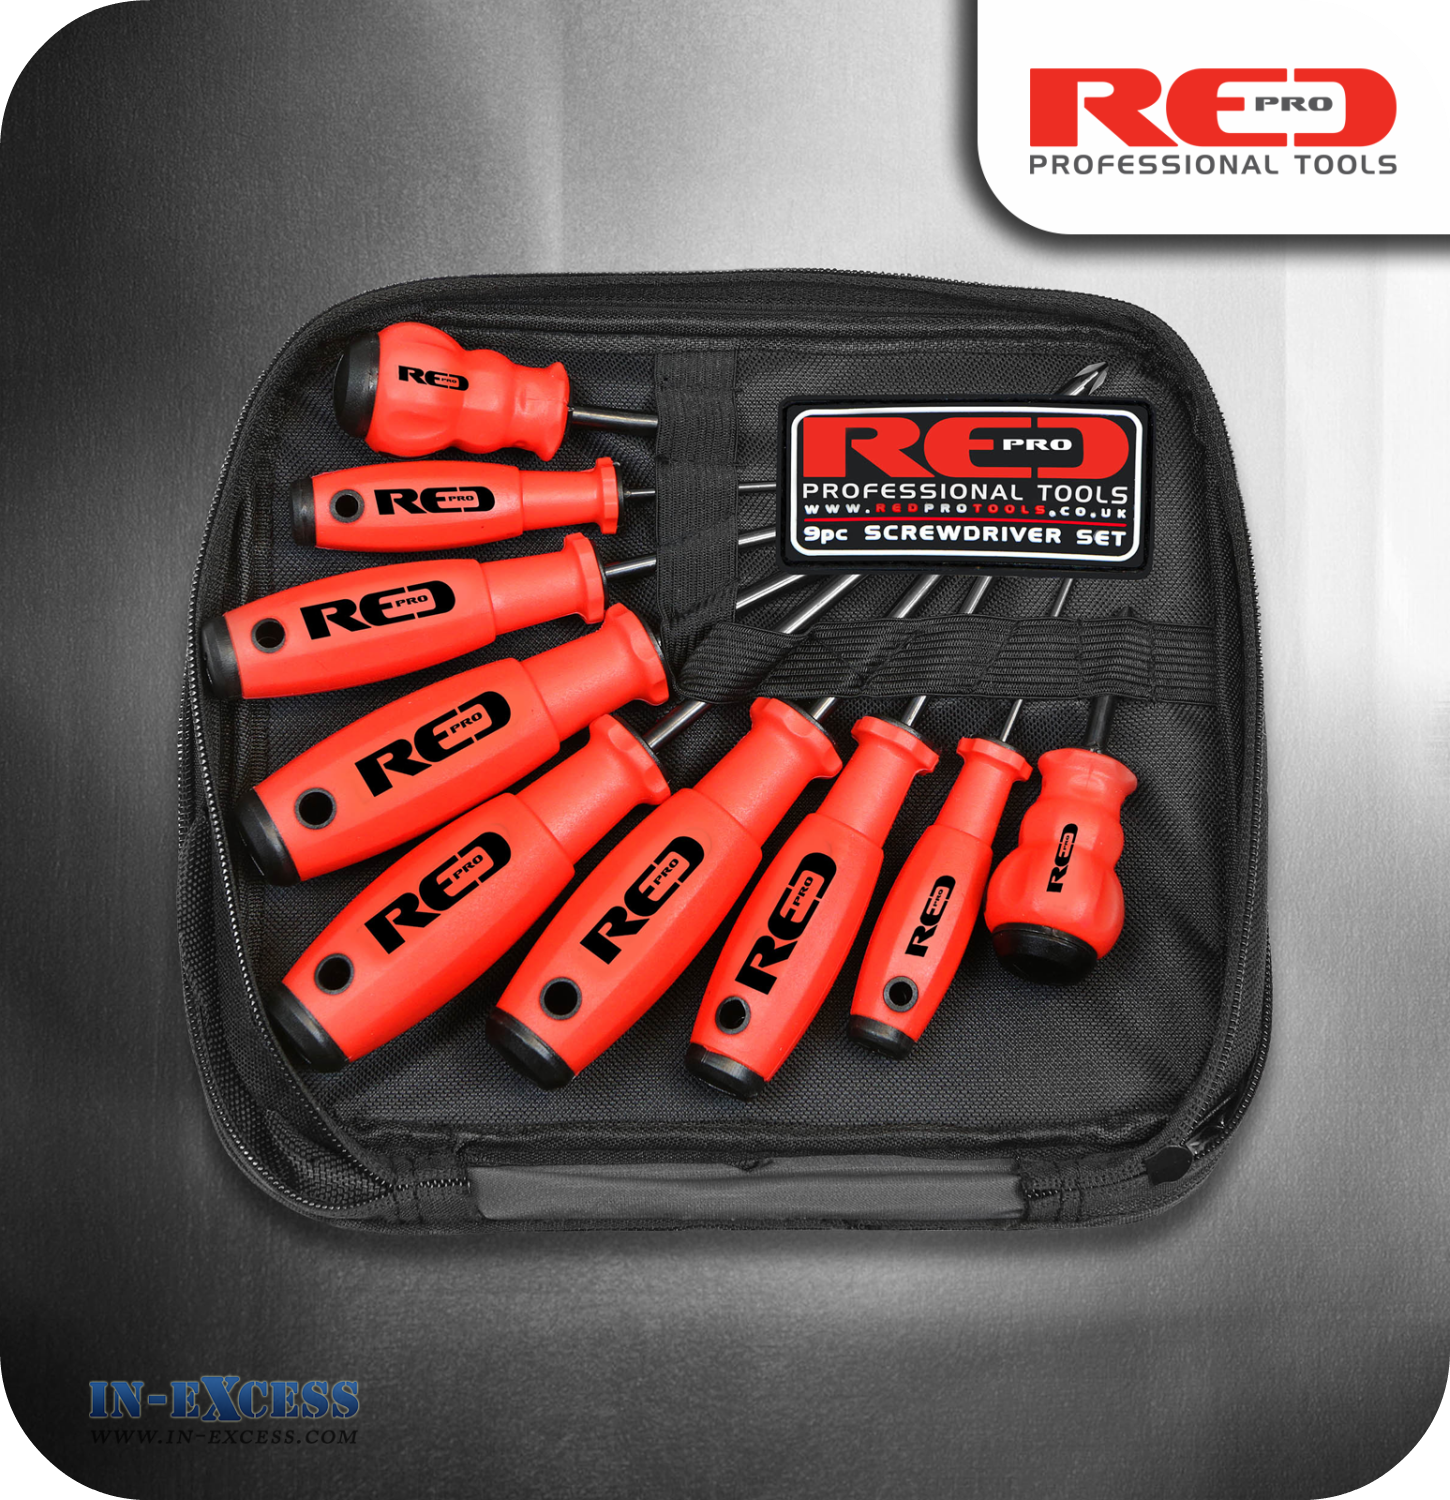 Red Pro Tools Screwdriver Set - 9 Pieces